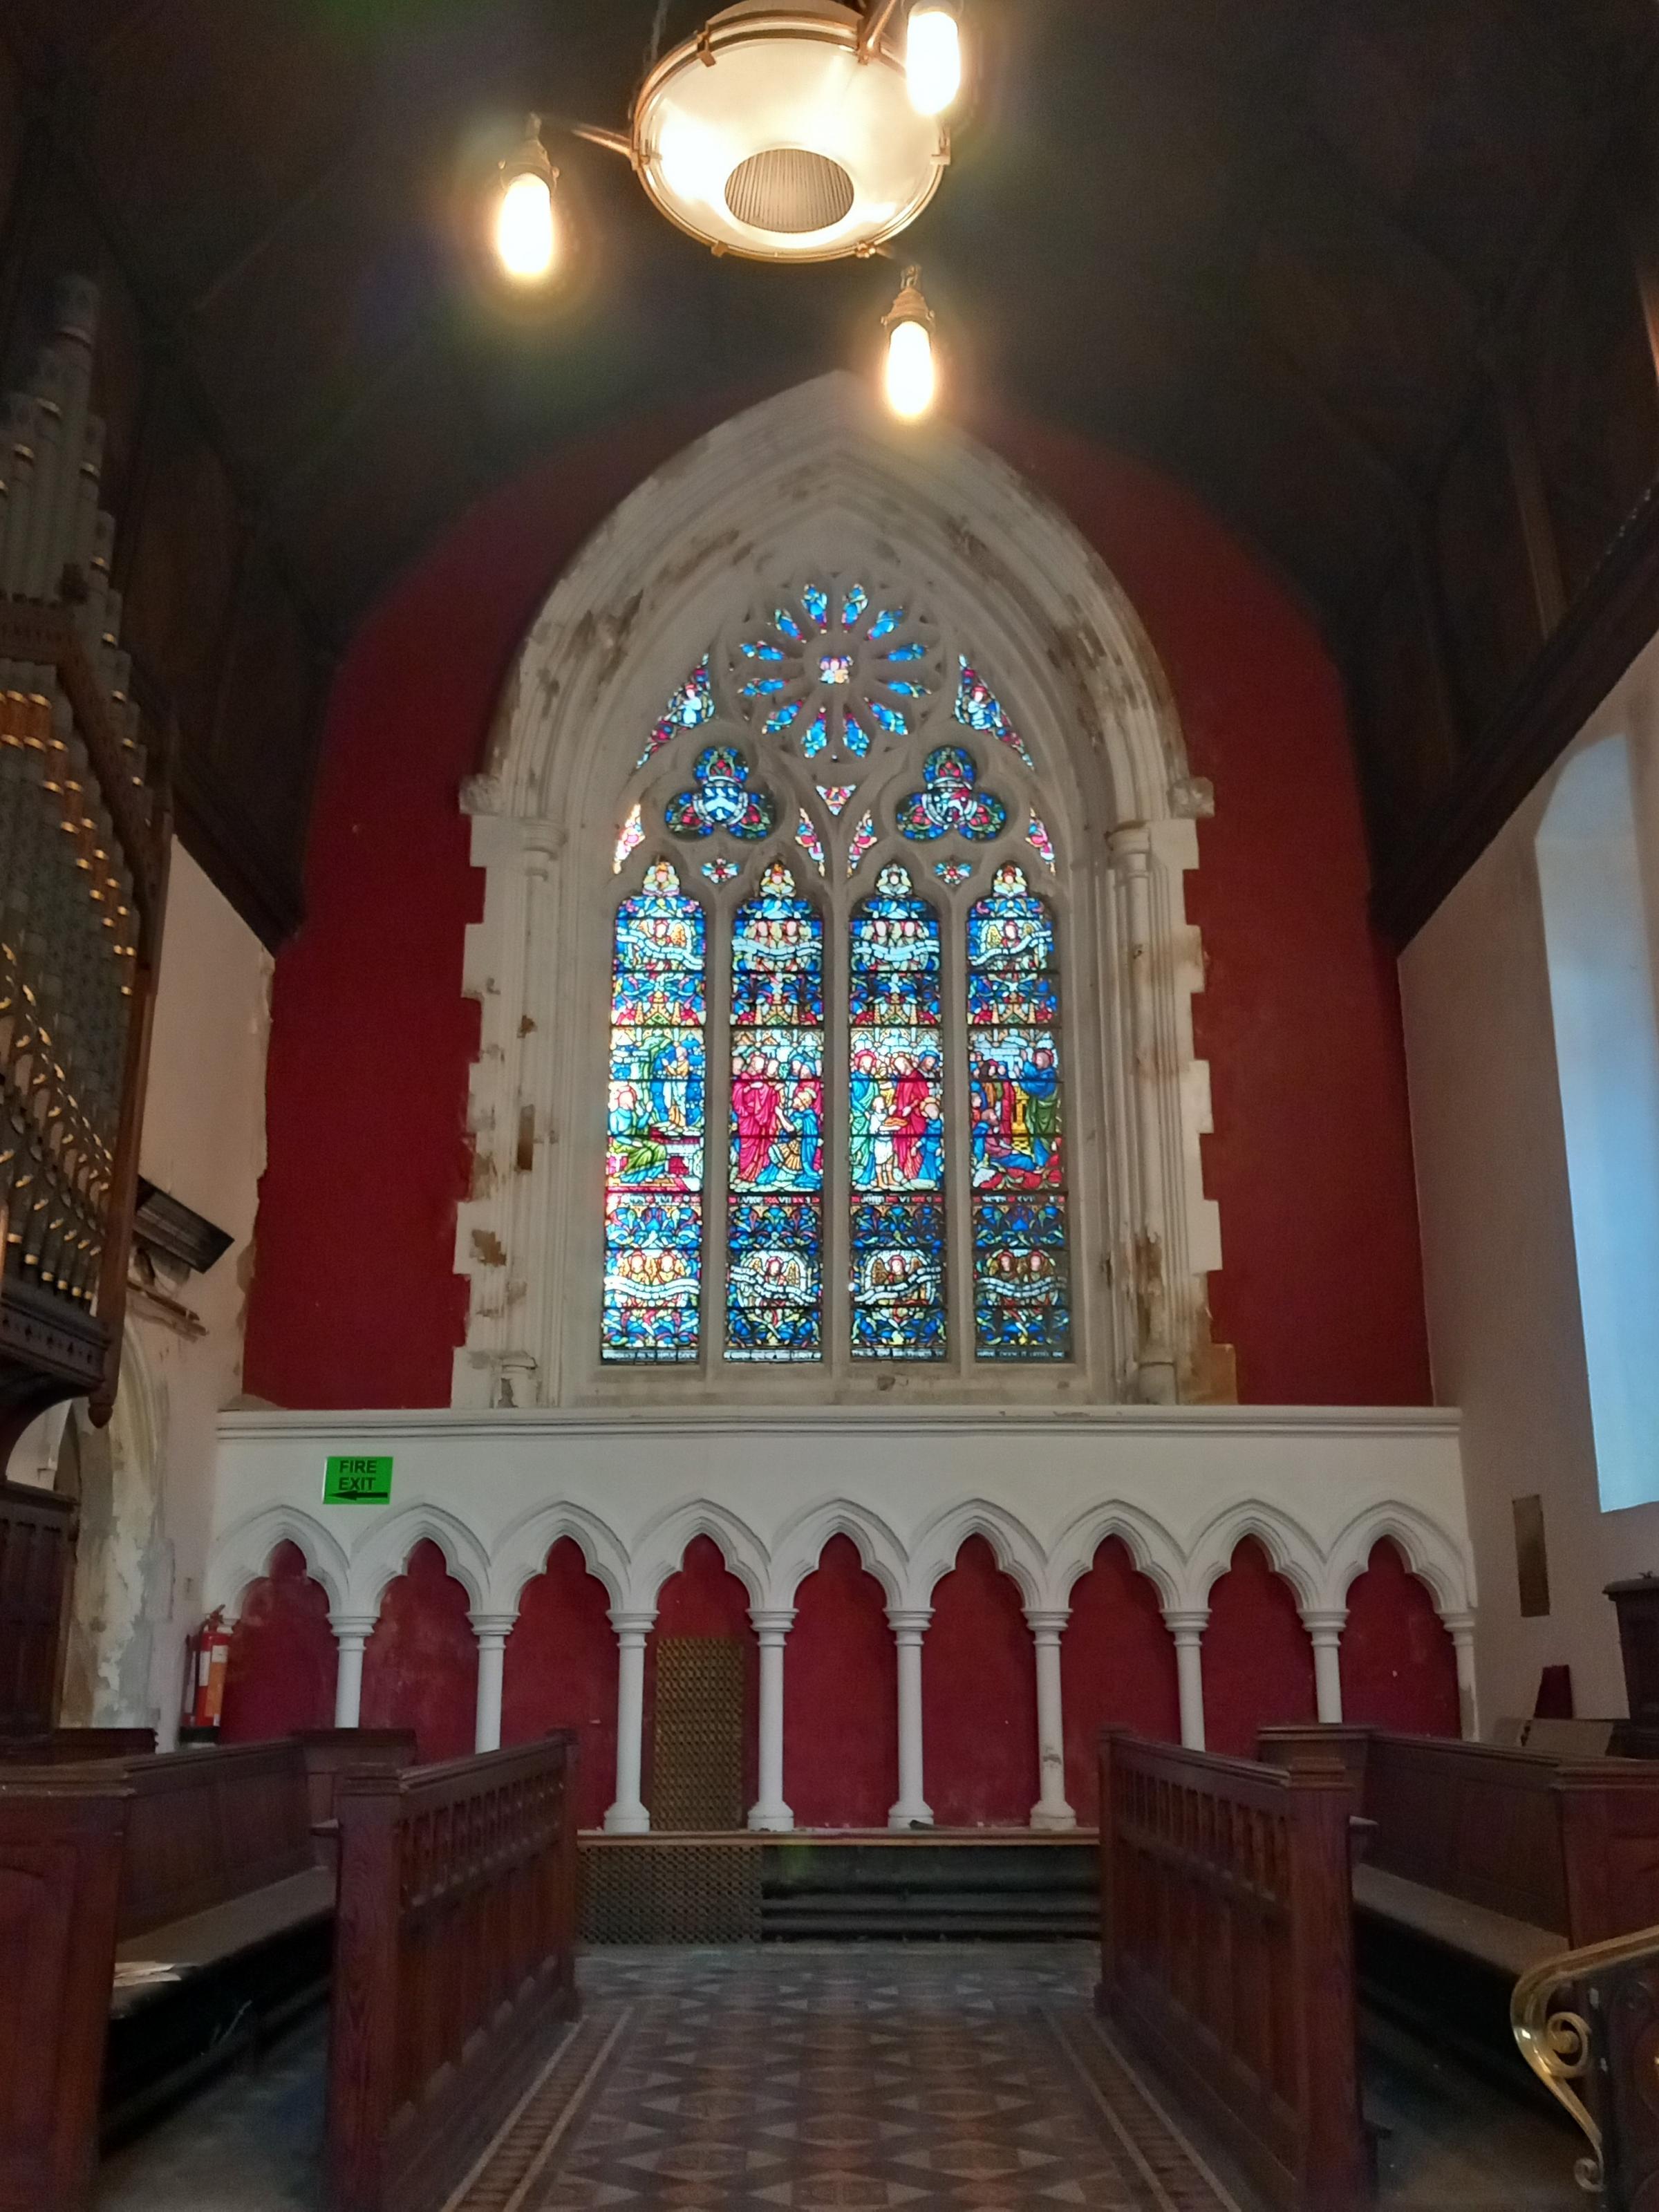 The stained glass chancel window - Menai Bridge English Presbyterian Church renovation Image Dale Spridgeon